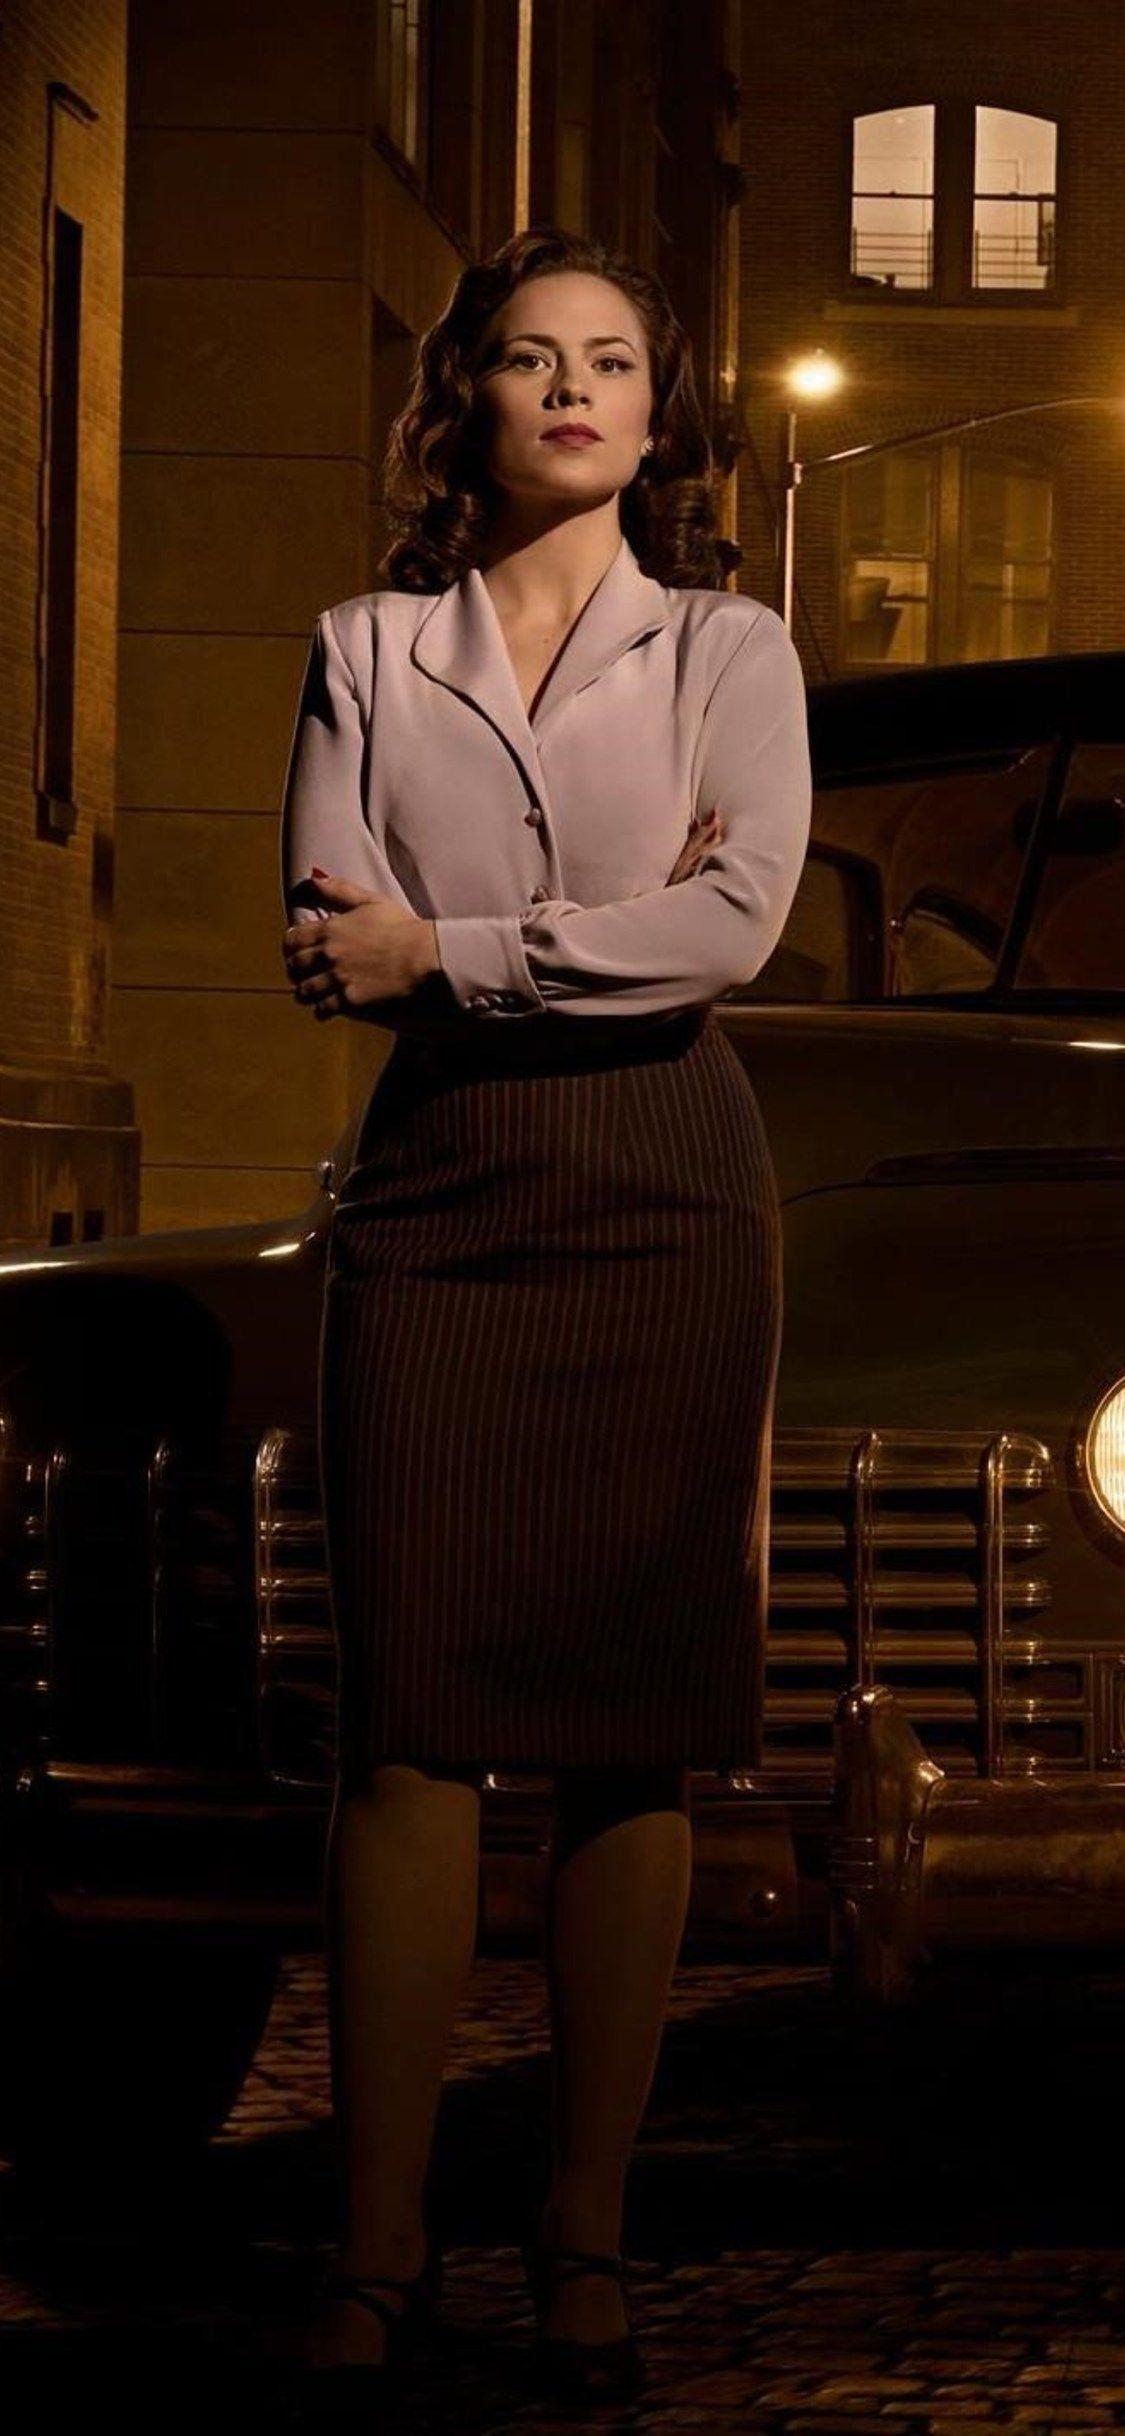 Agent Carter Wallpapers Top Free Agent Carter Backgrounds Wallpaperaccess